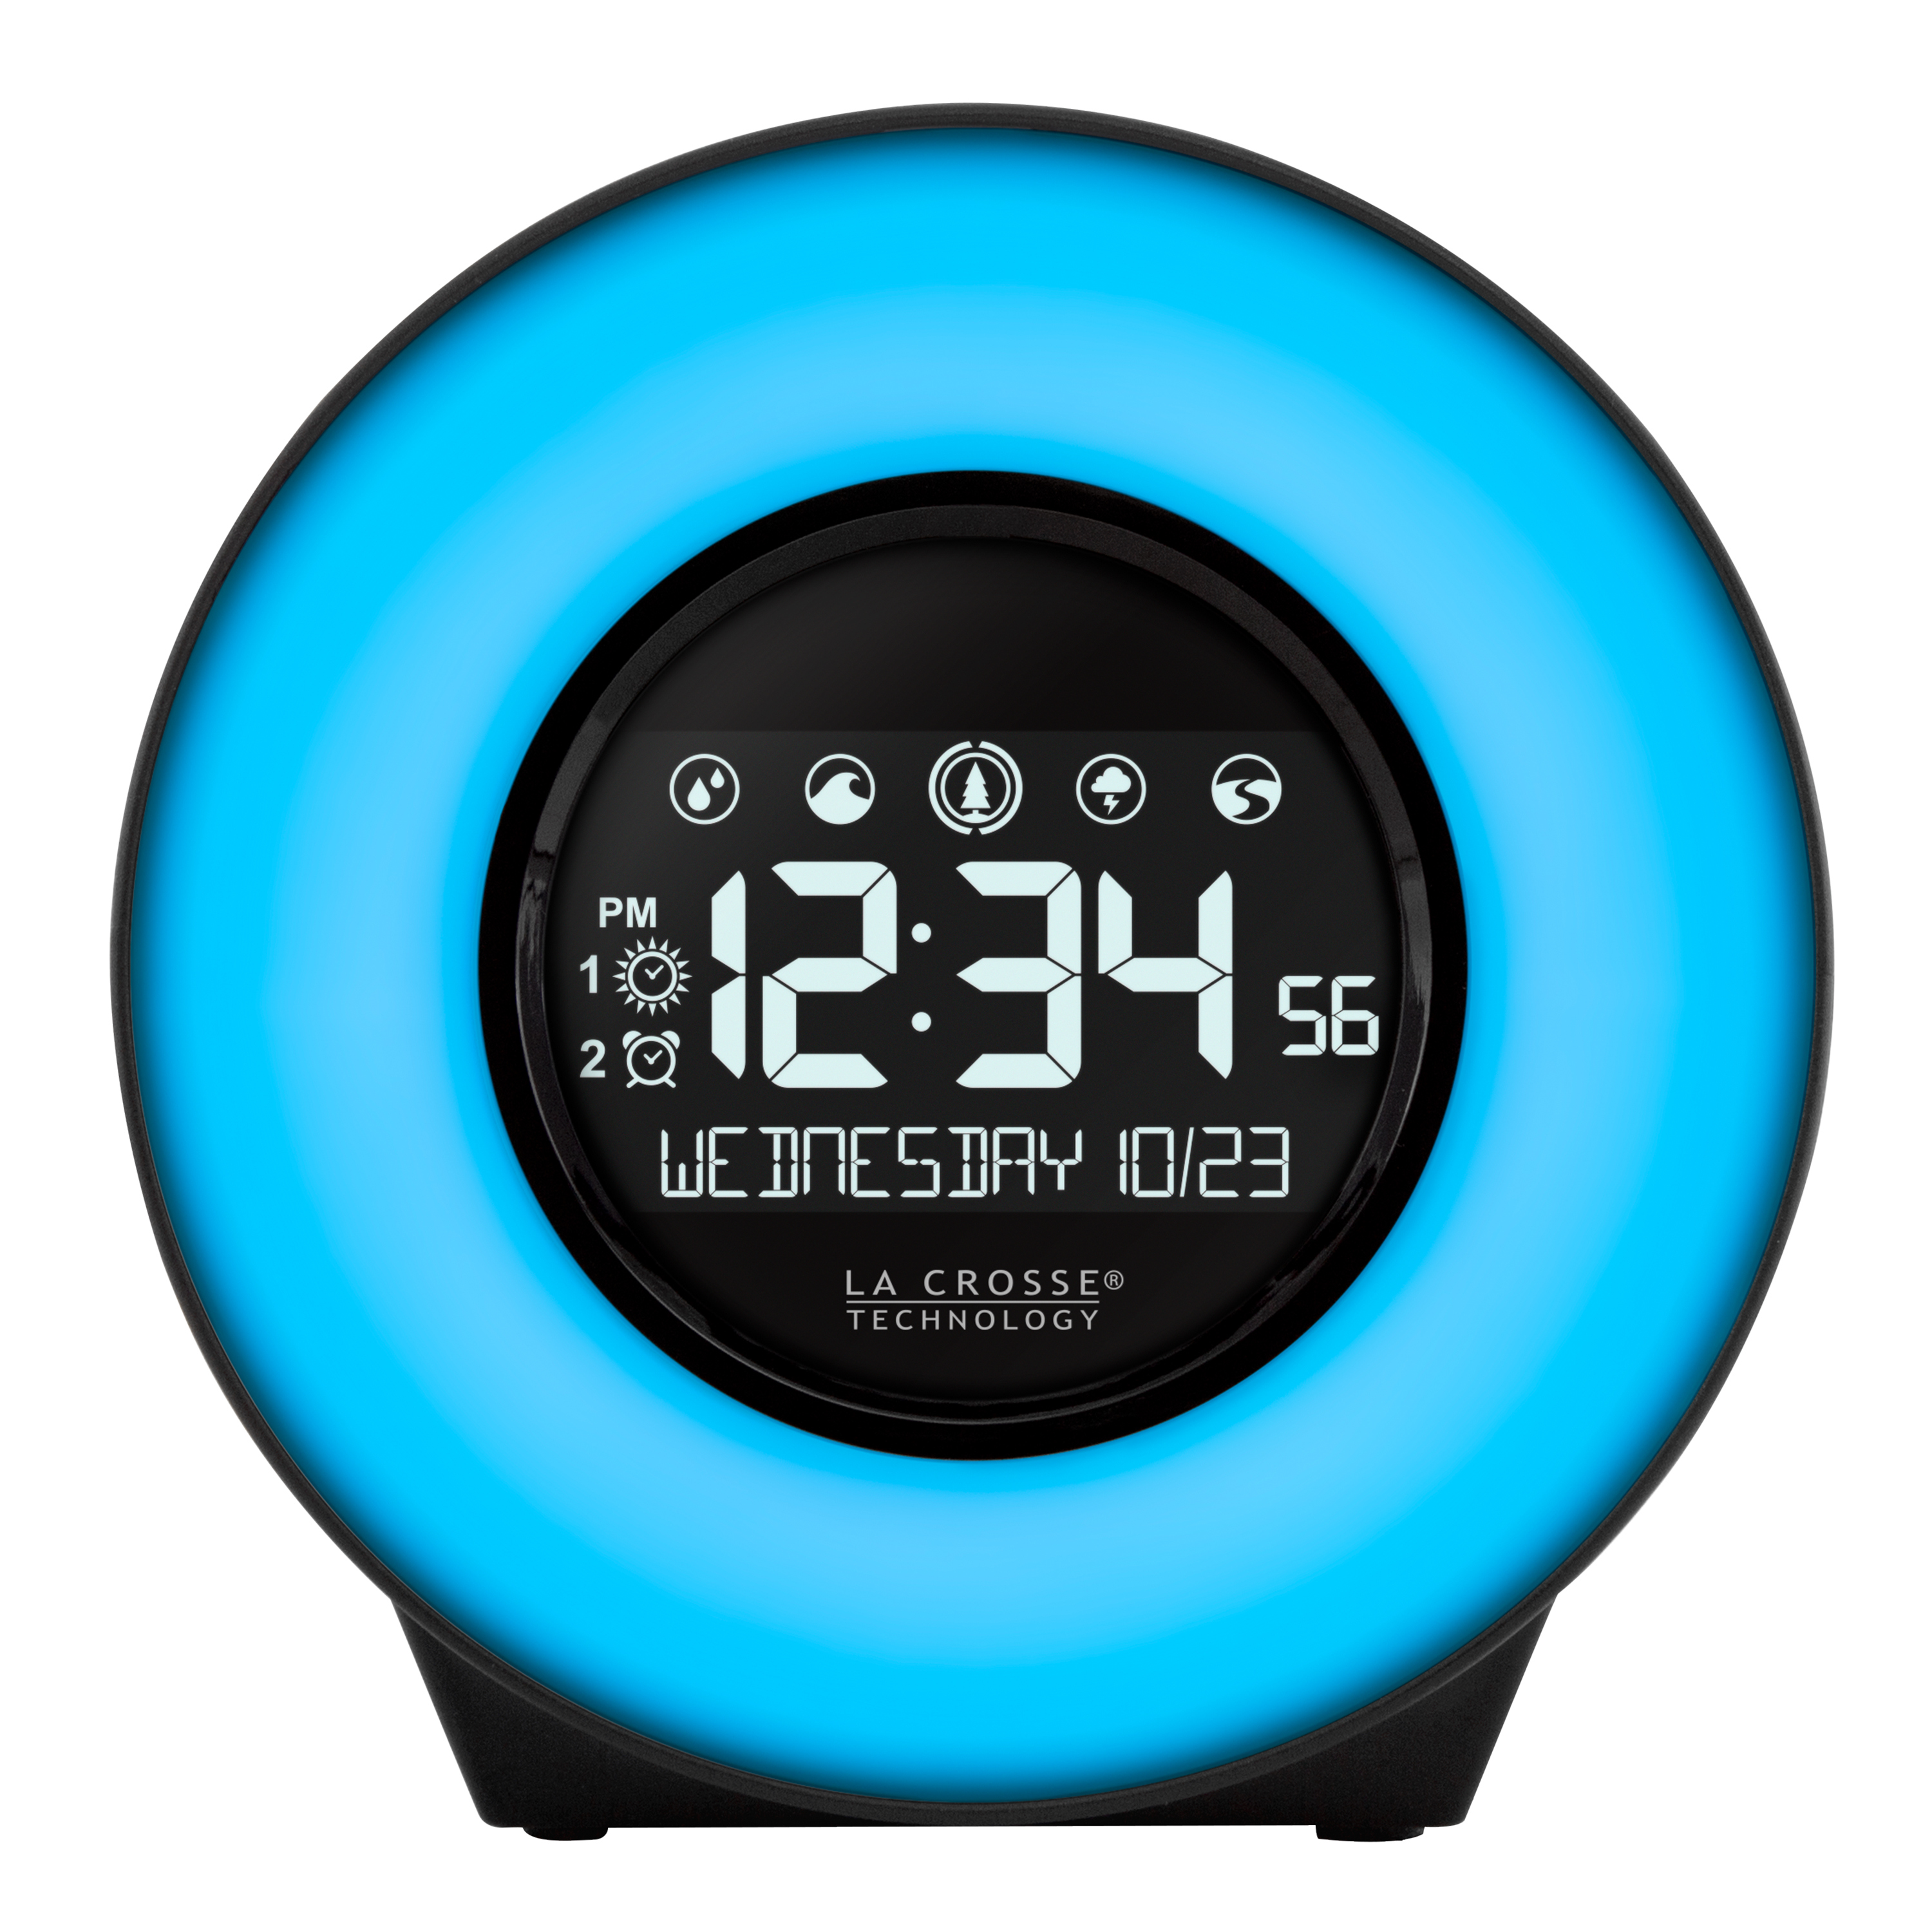 La Crosse Technology C83117 Multi-Color LCD Desk Digital Alarm Clock with Sounds and USB - image 3 of 10